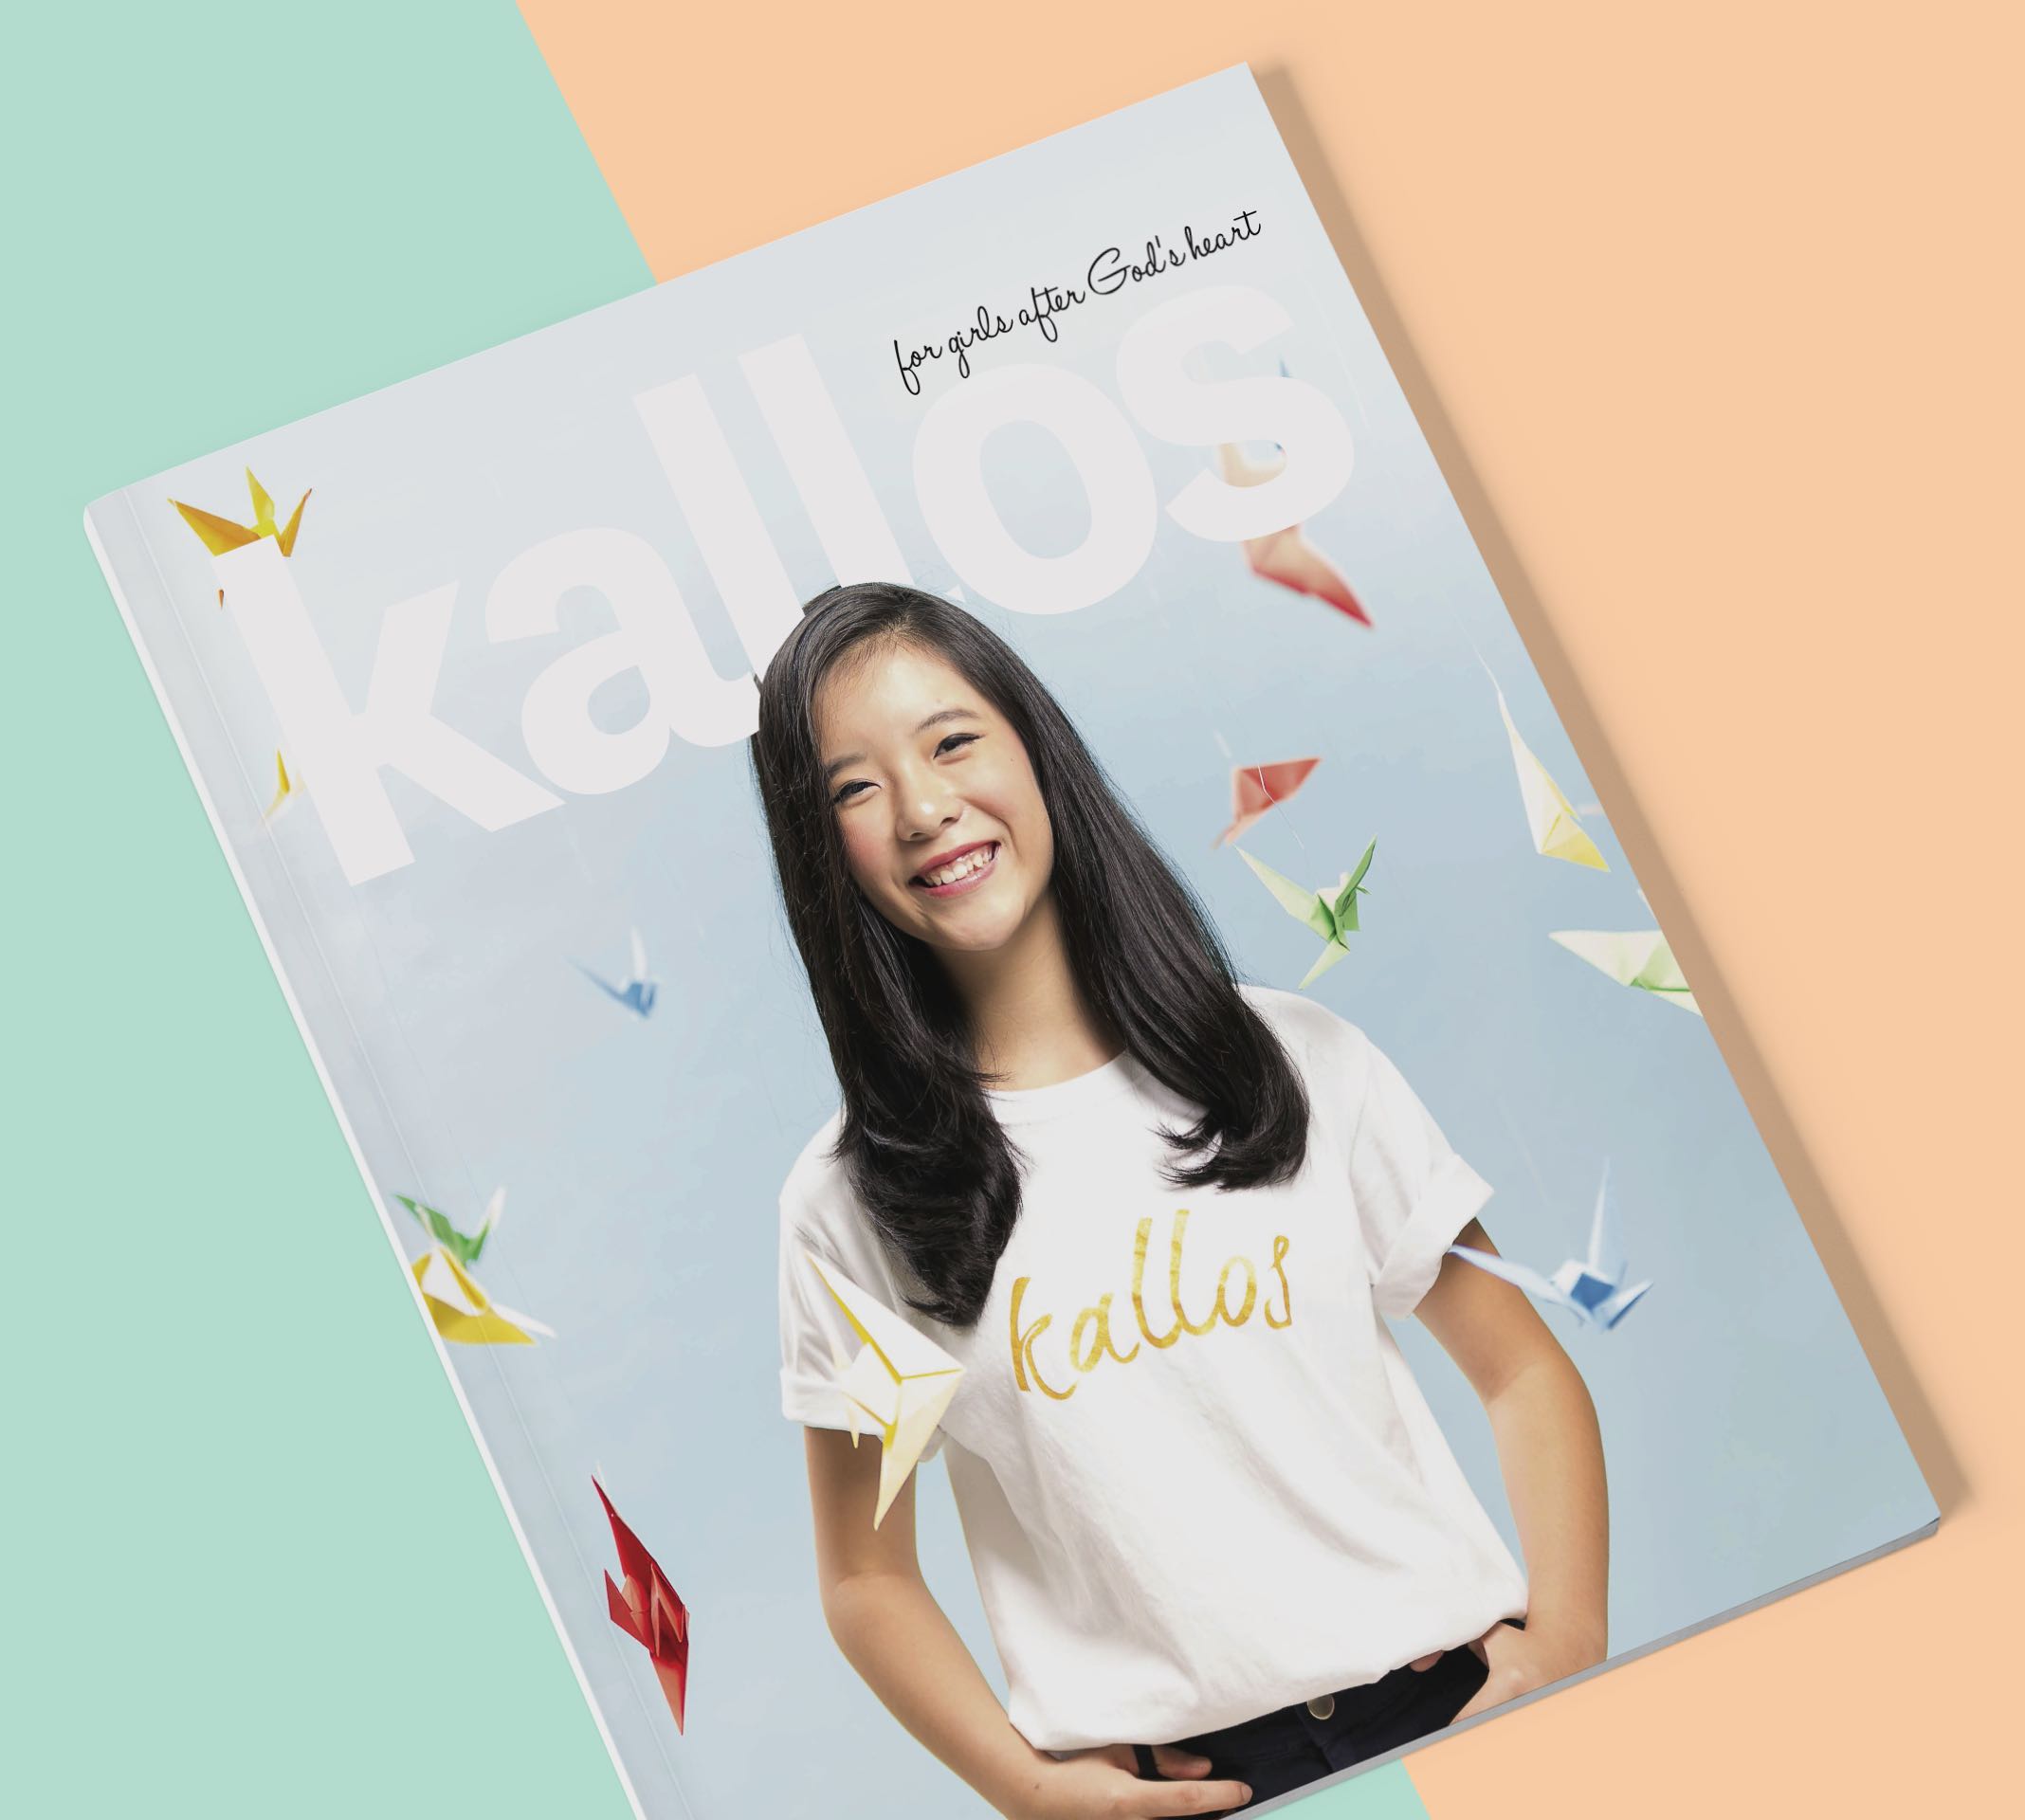 Kallos magazine.